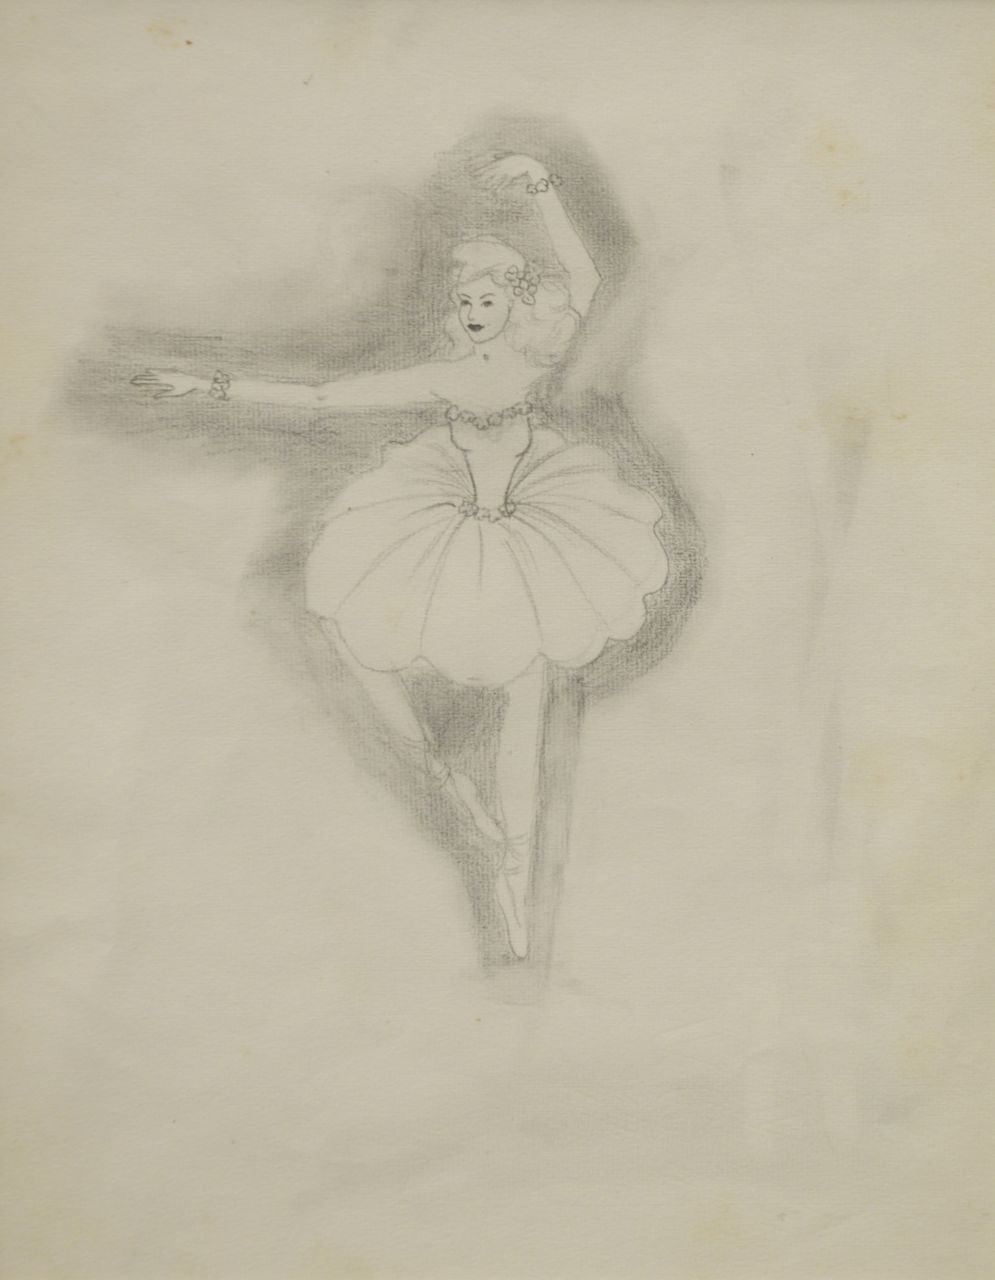 Oranje-Nassau (Prinses Beatrix) B.W.A. van | Beatrix Wilhelmina Armgard van Oranje-Nassau (Prinses Beatrix), Ballet dancer, pencil on paper 30.0 x 23.0 cm